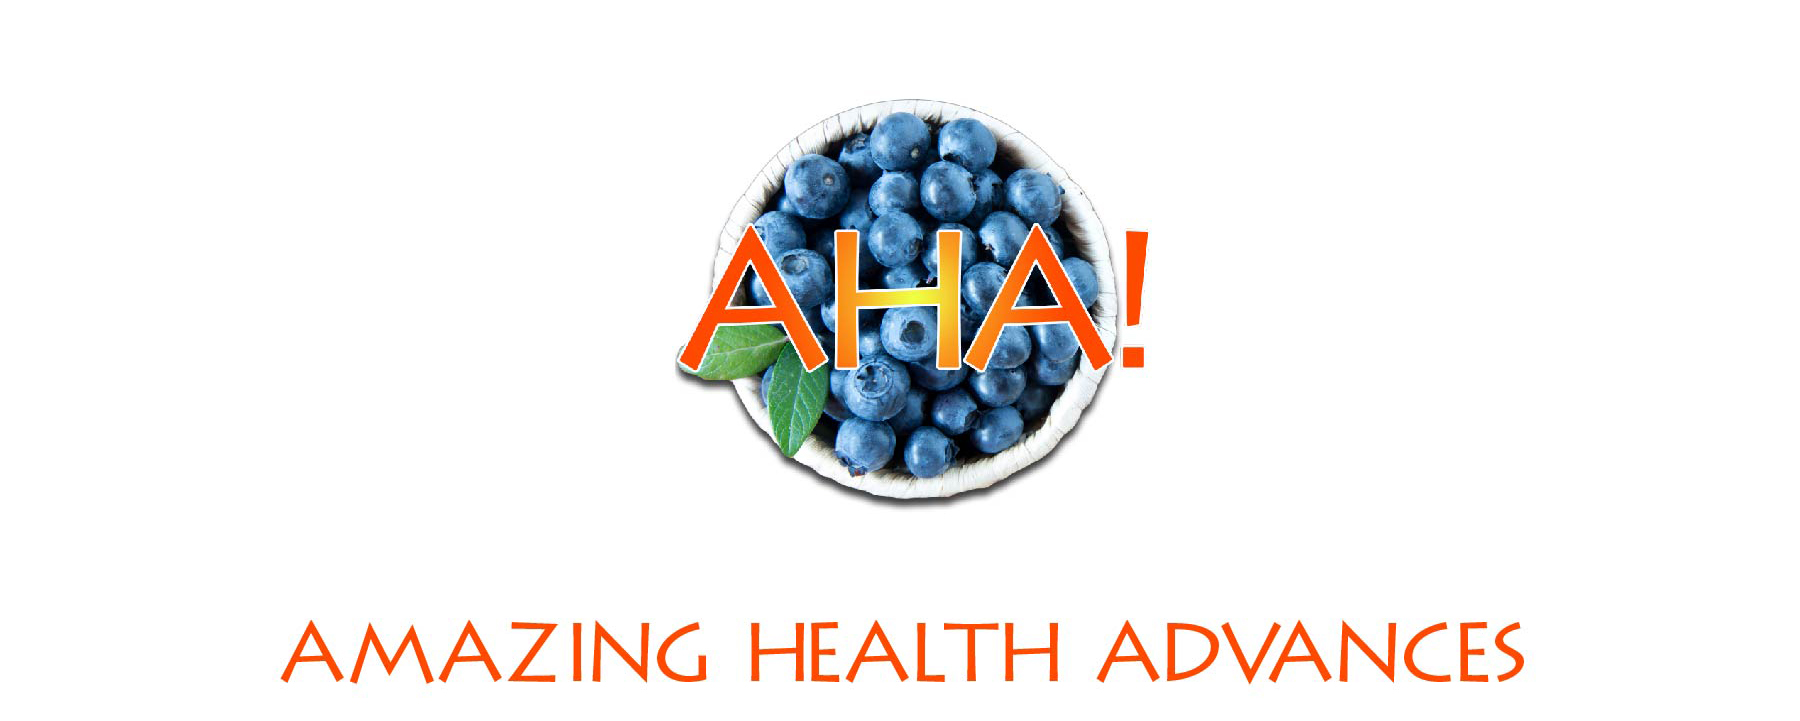 Amazing Health Advances